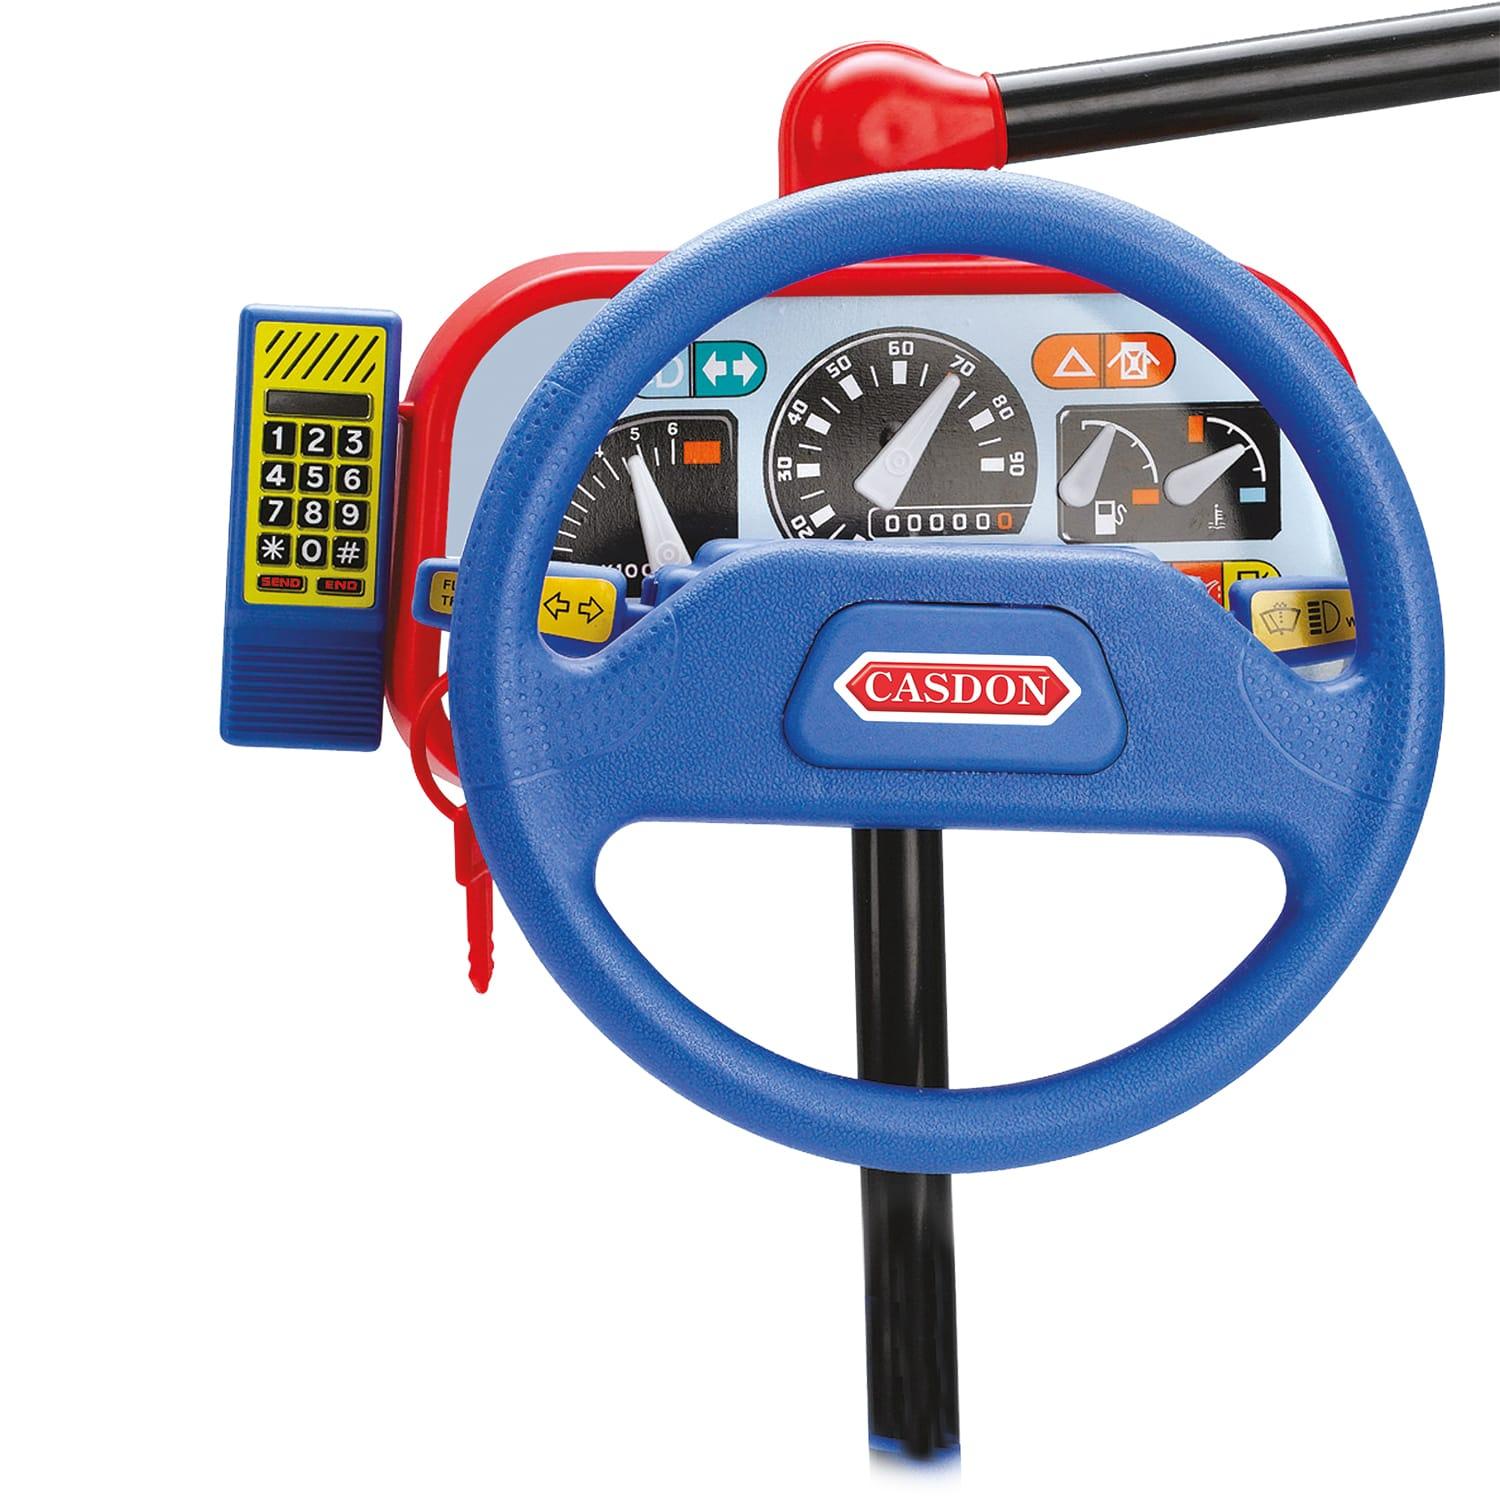 electronic backseat driver steering wheel toy